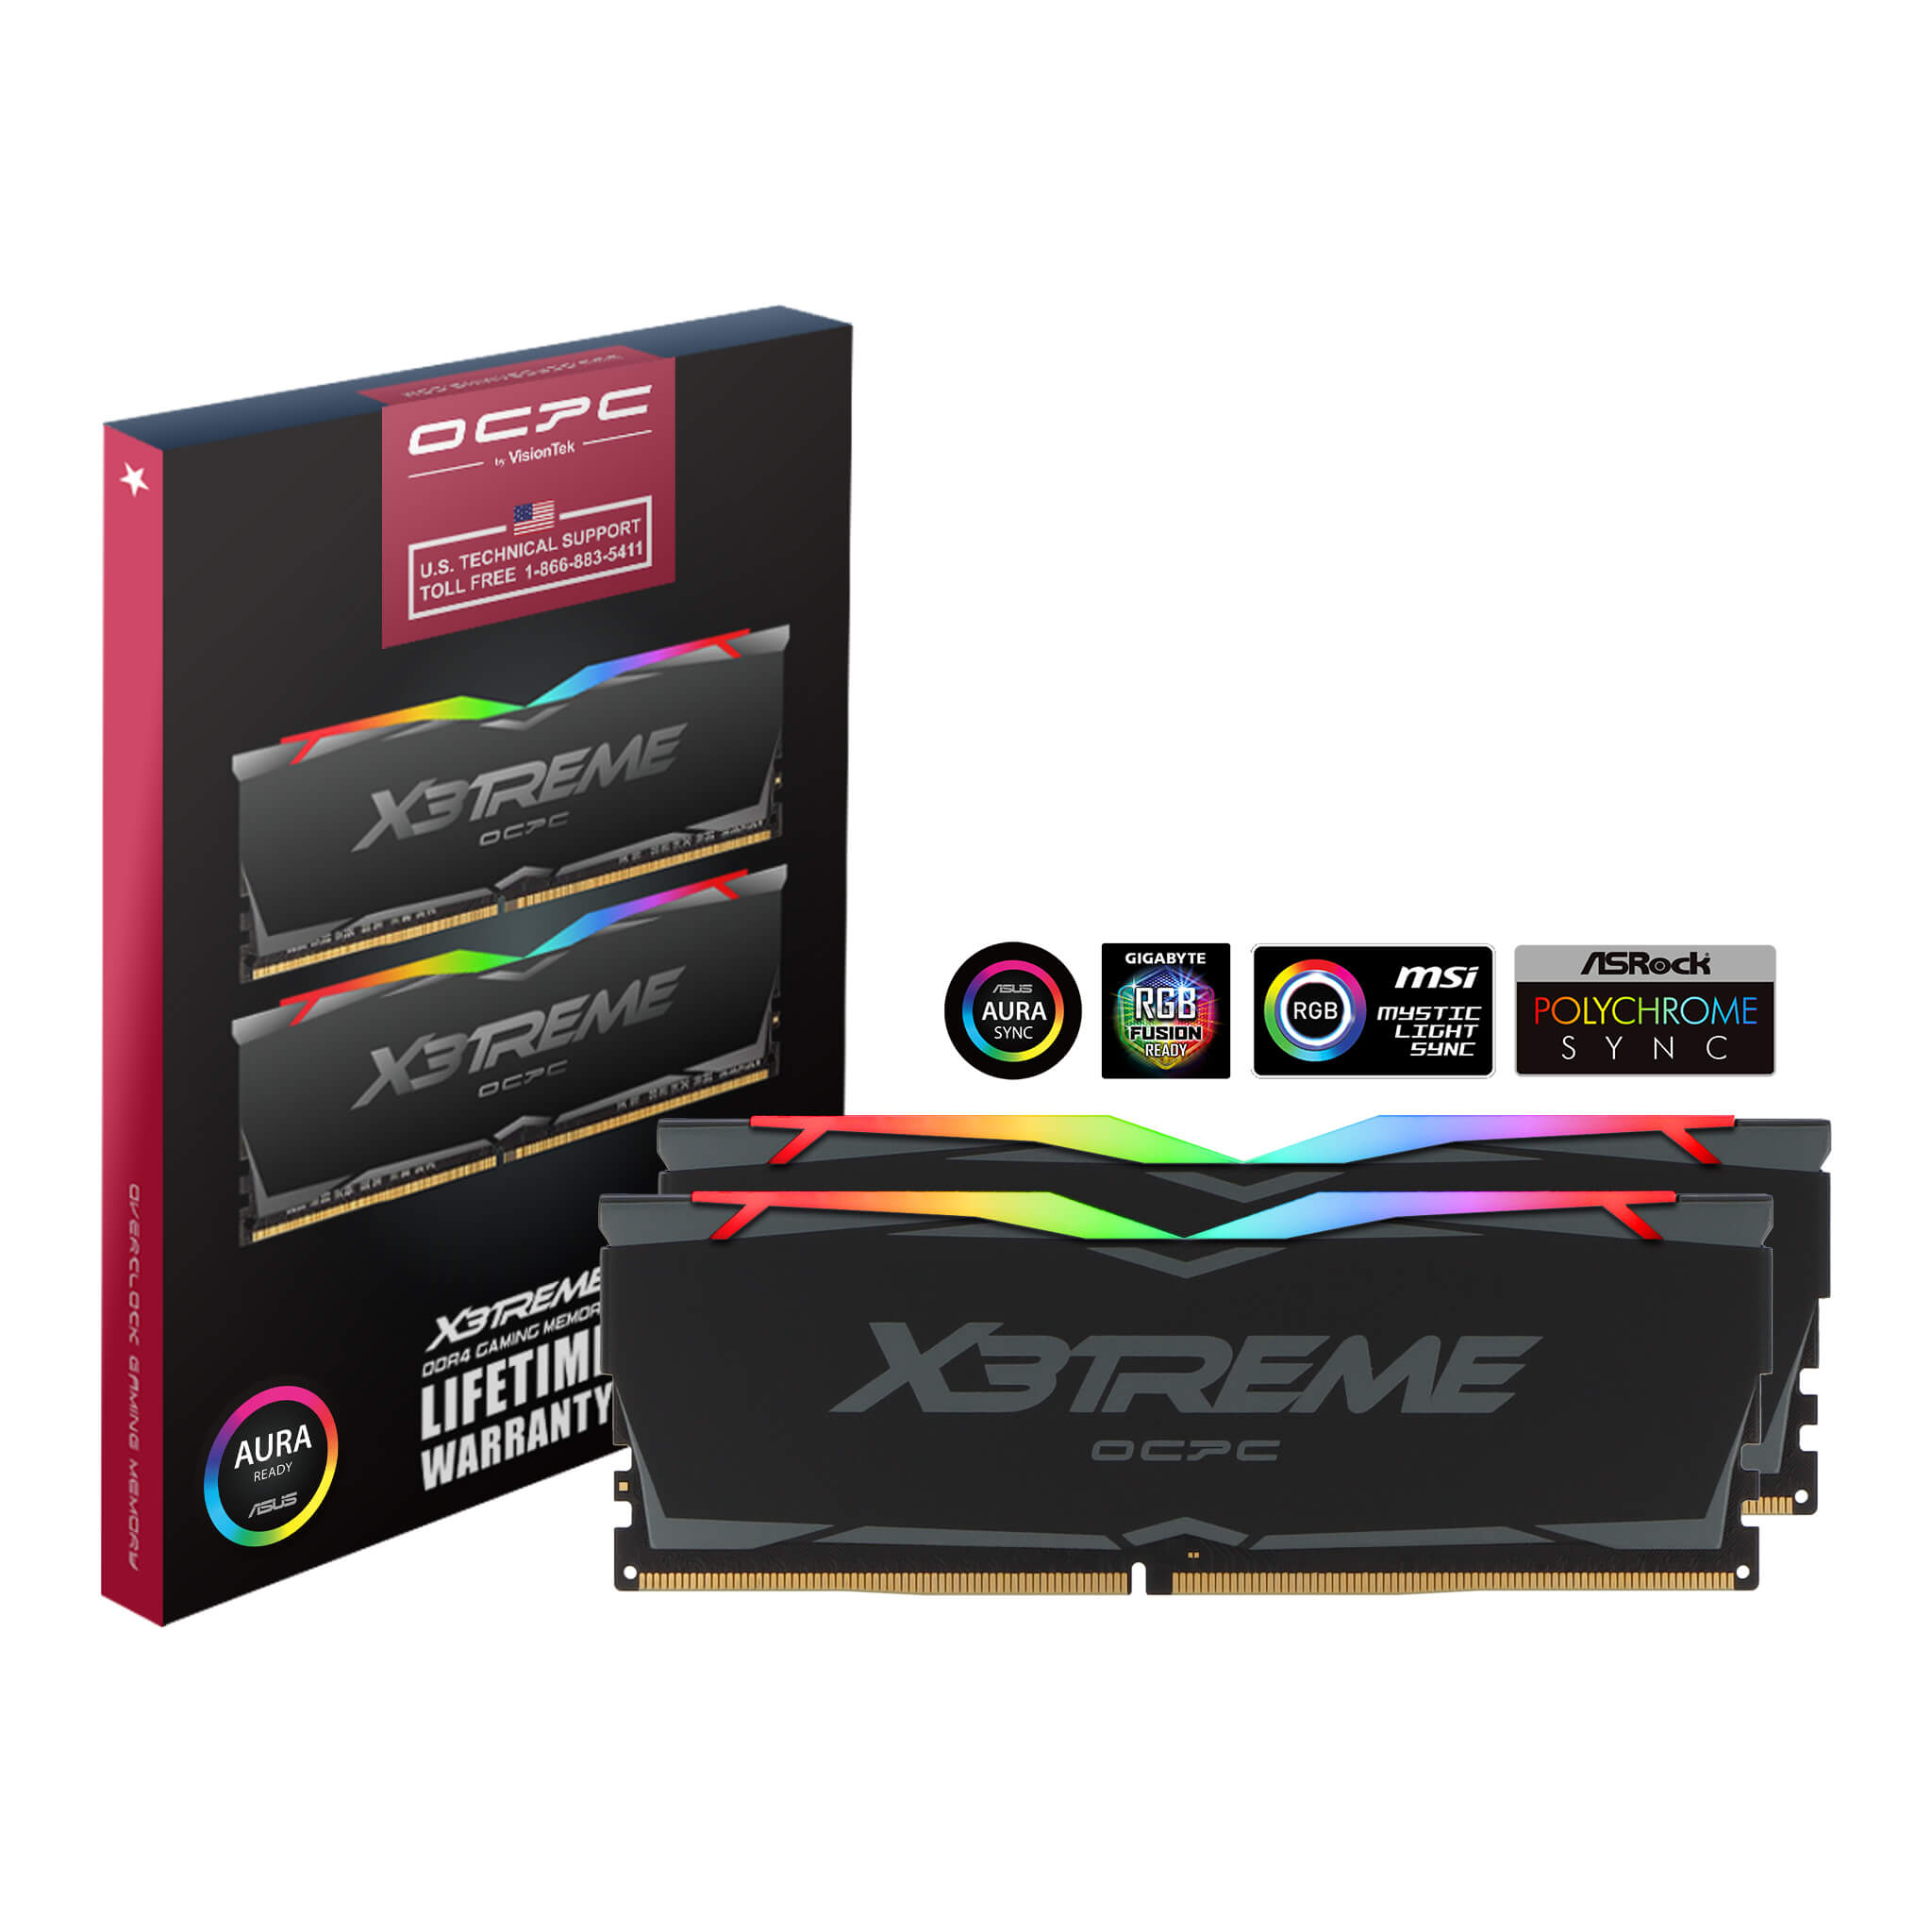 OCPC X3Treme Aura DDR4 Kit (2x8GB) - - CL16 - Black VisionTek.com